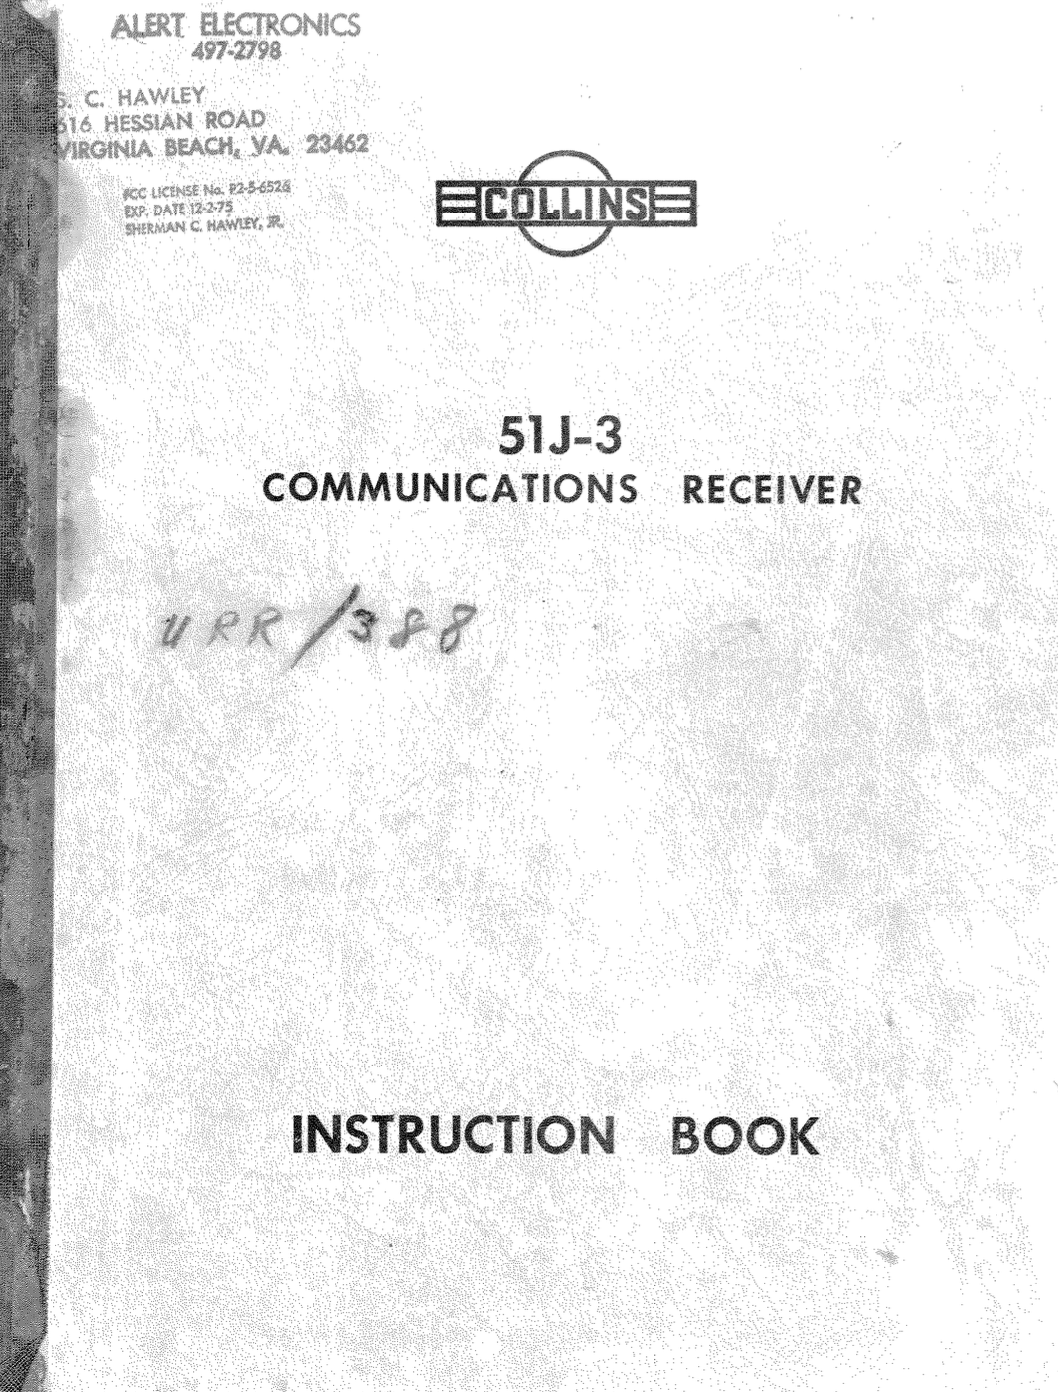 Collins 51J-3 Communications Receiver - Instruction Manual